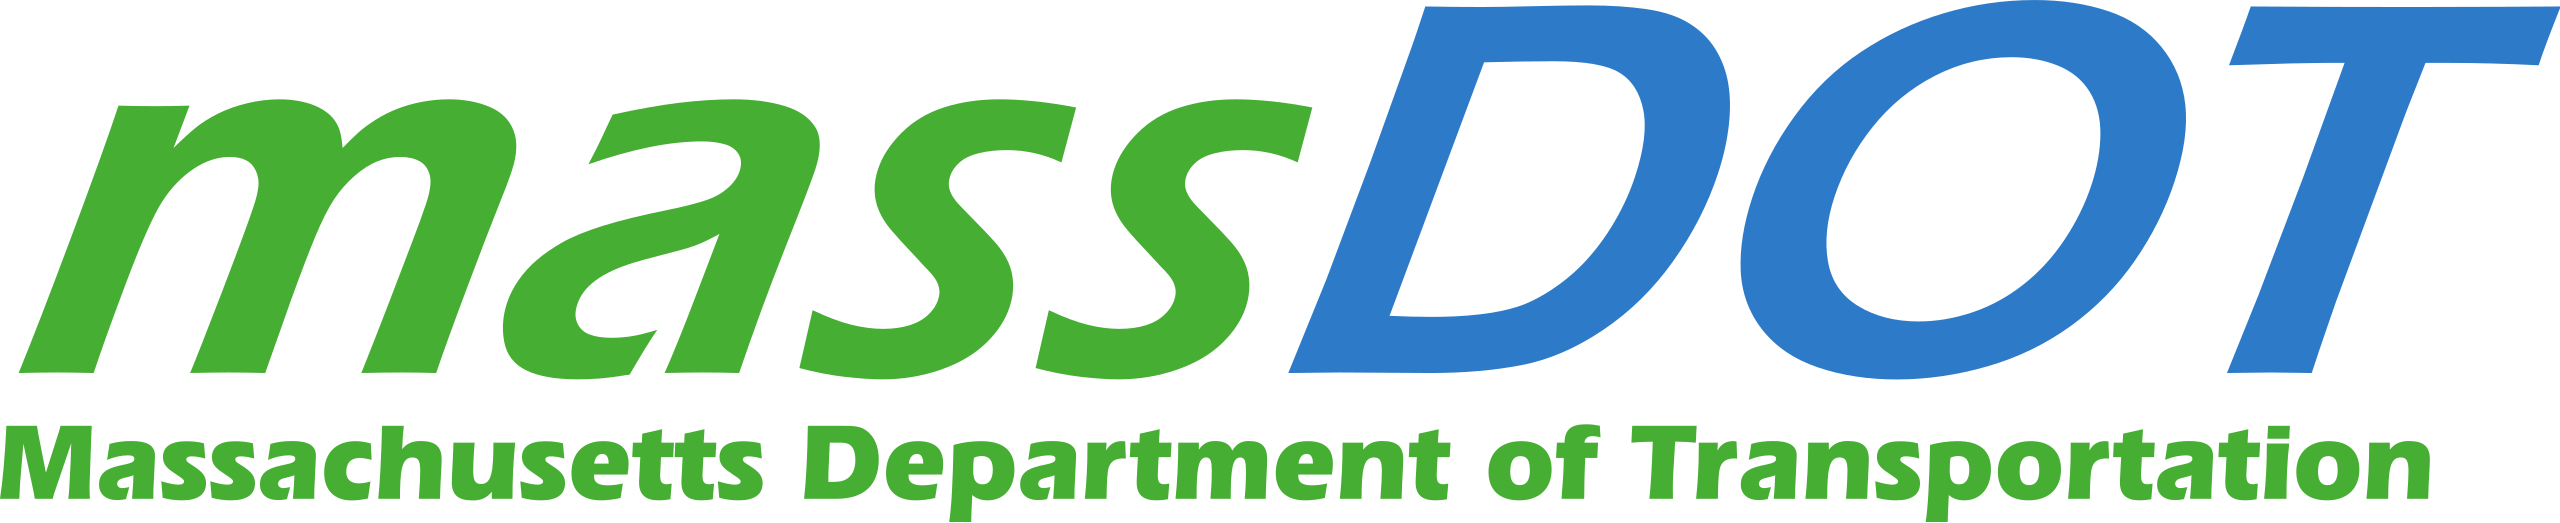 MassDOT logo 